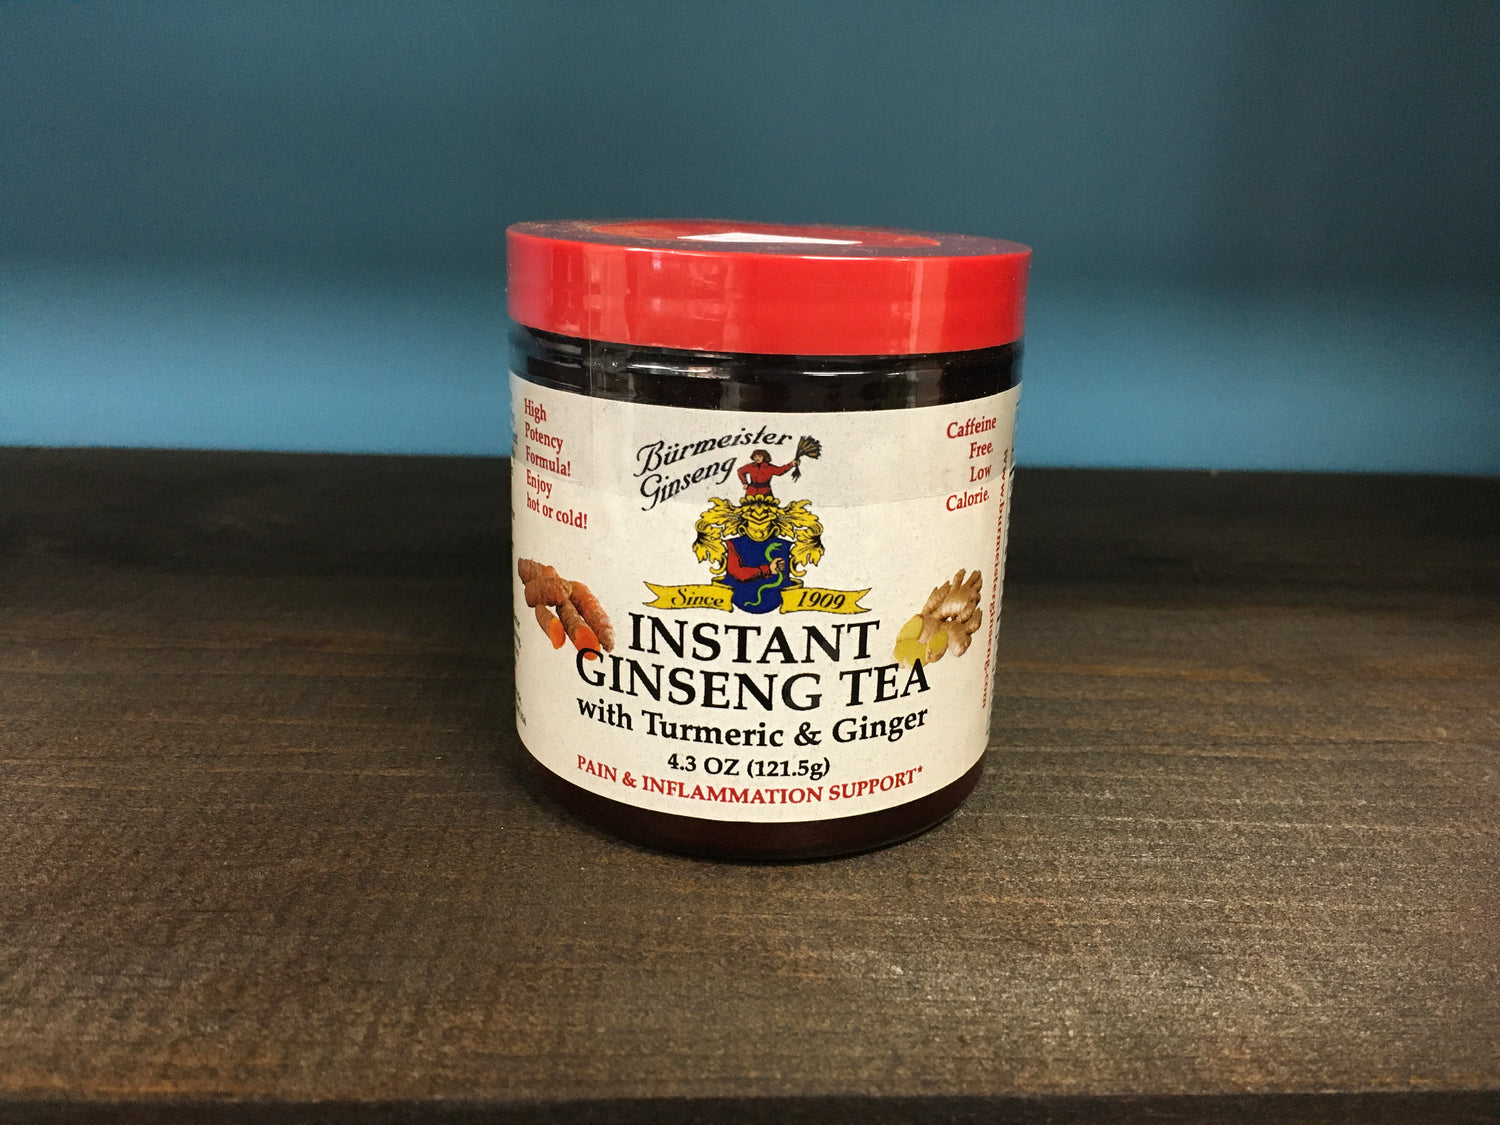 American Panax Ginseng, Turmeric & Ginger Instant Tea, 4.3 oz (30 servings)